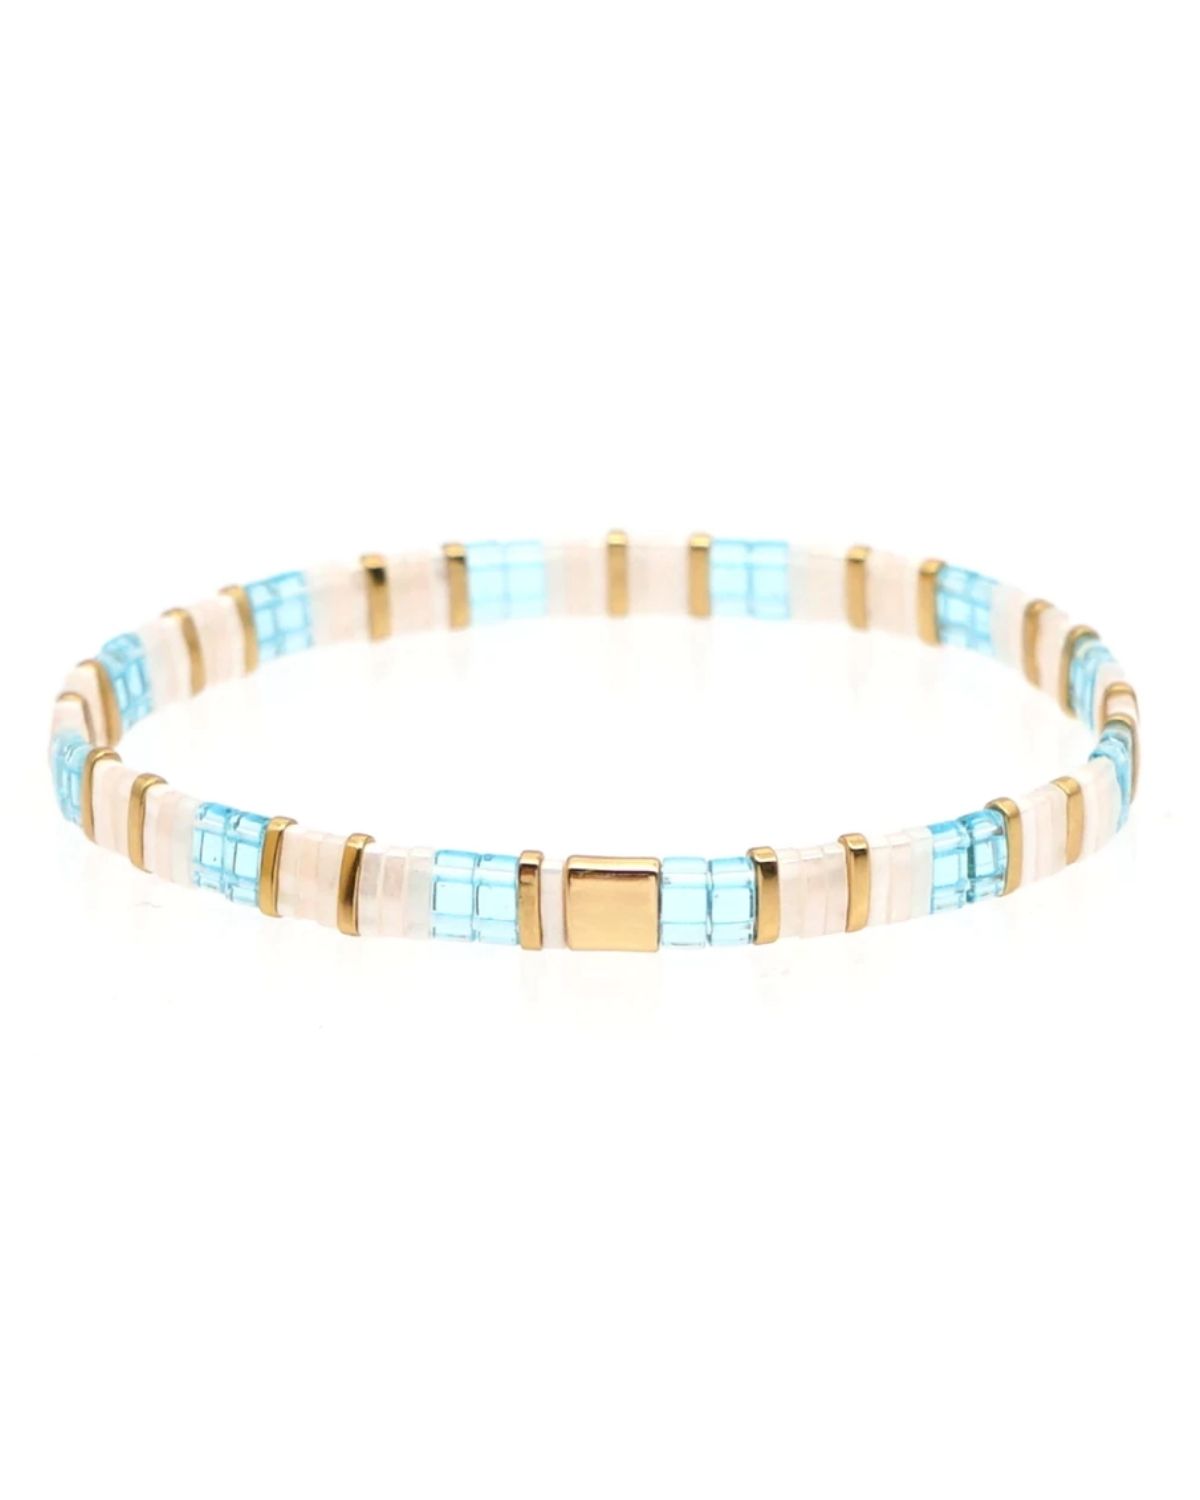 Bracelet with light blue, white and Gold Miyuki Tila Beads